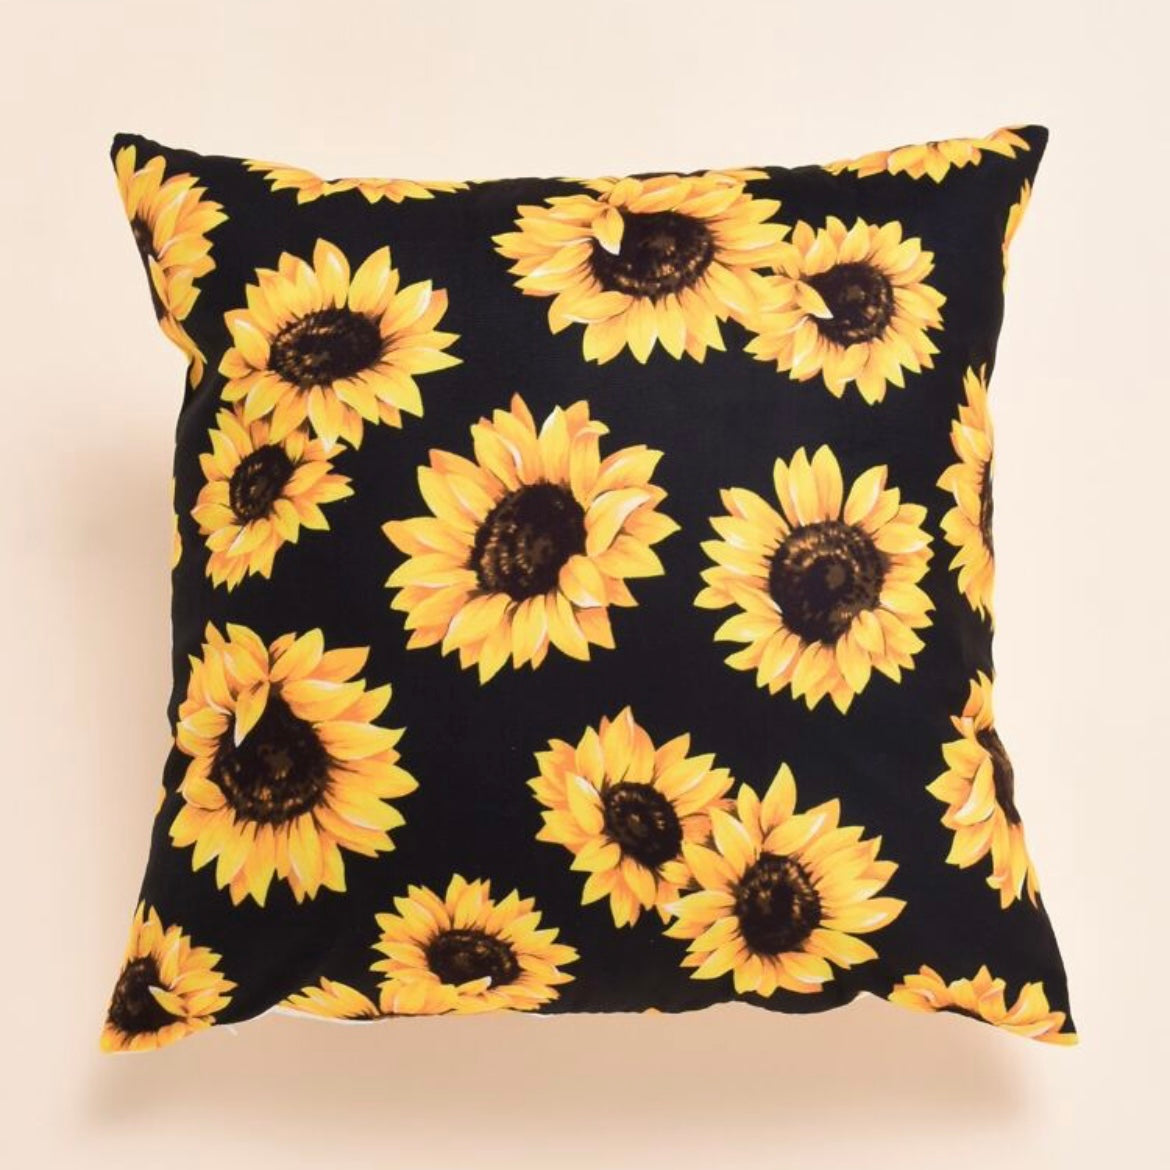 Sunflower Throw Pillow Cover